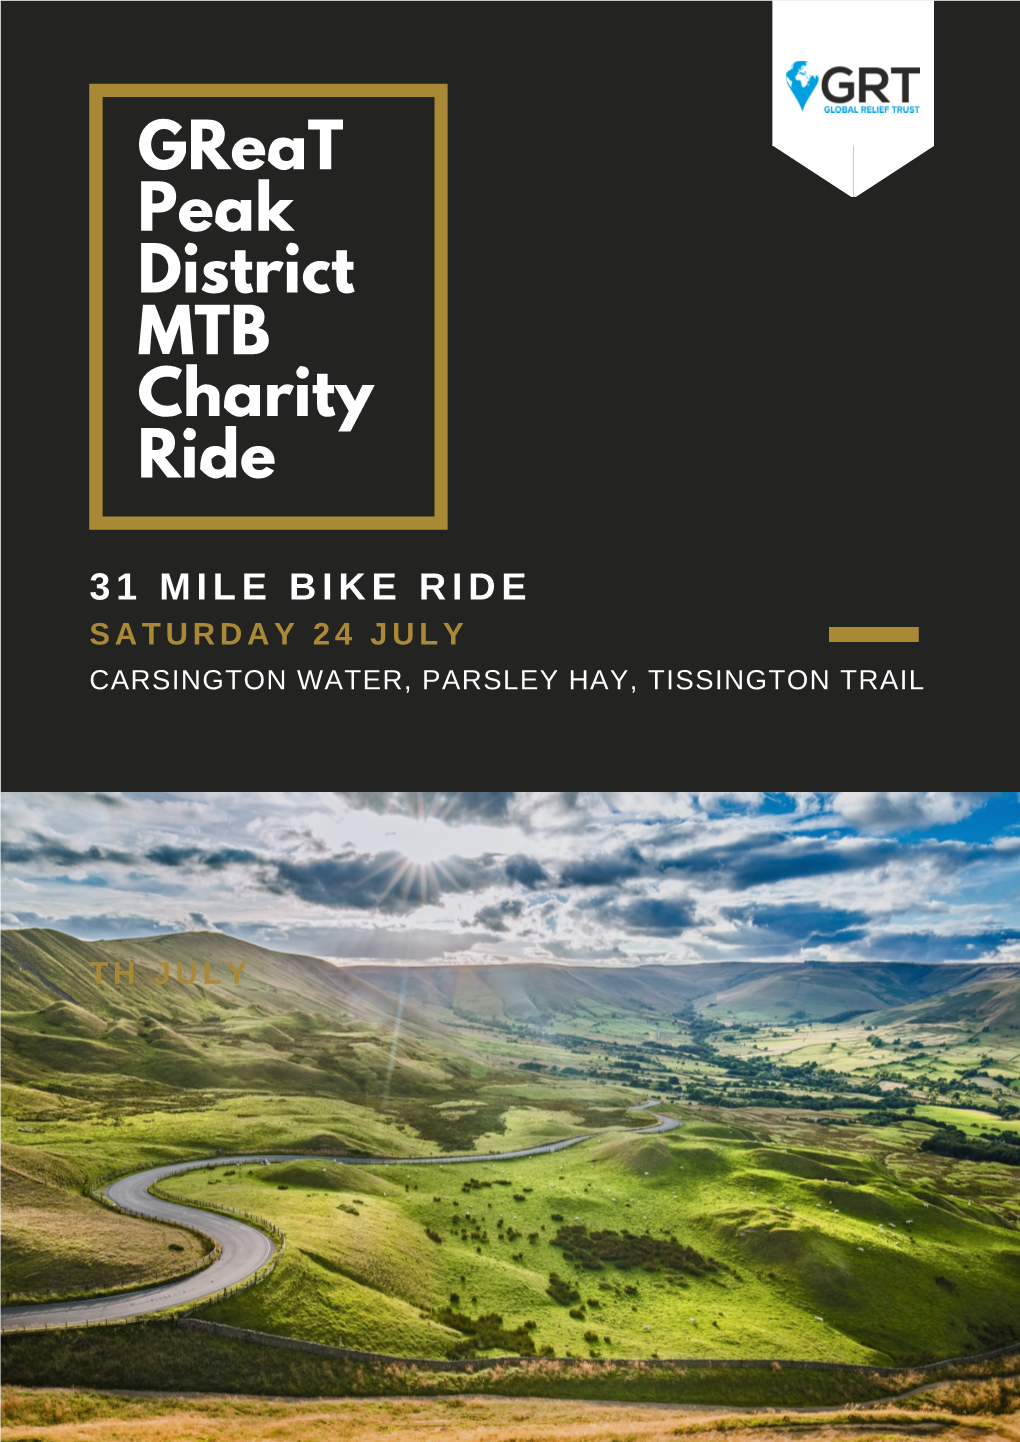 Great Peak District MTB Charity Ride